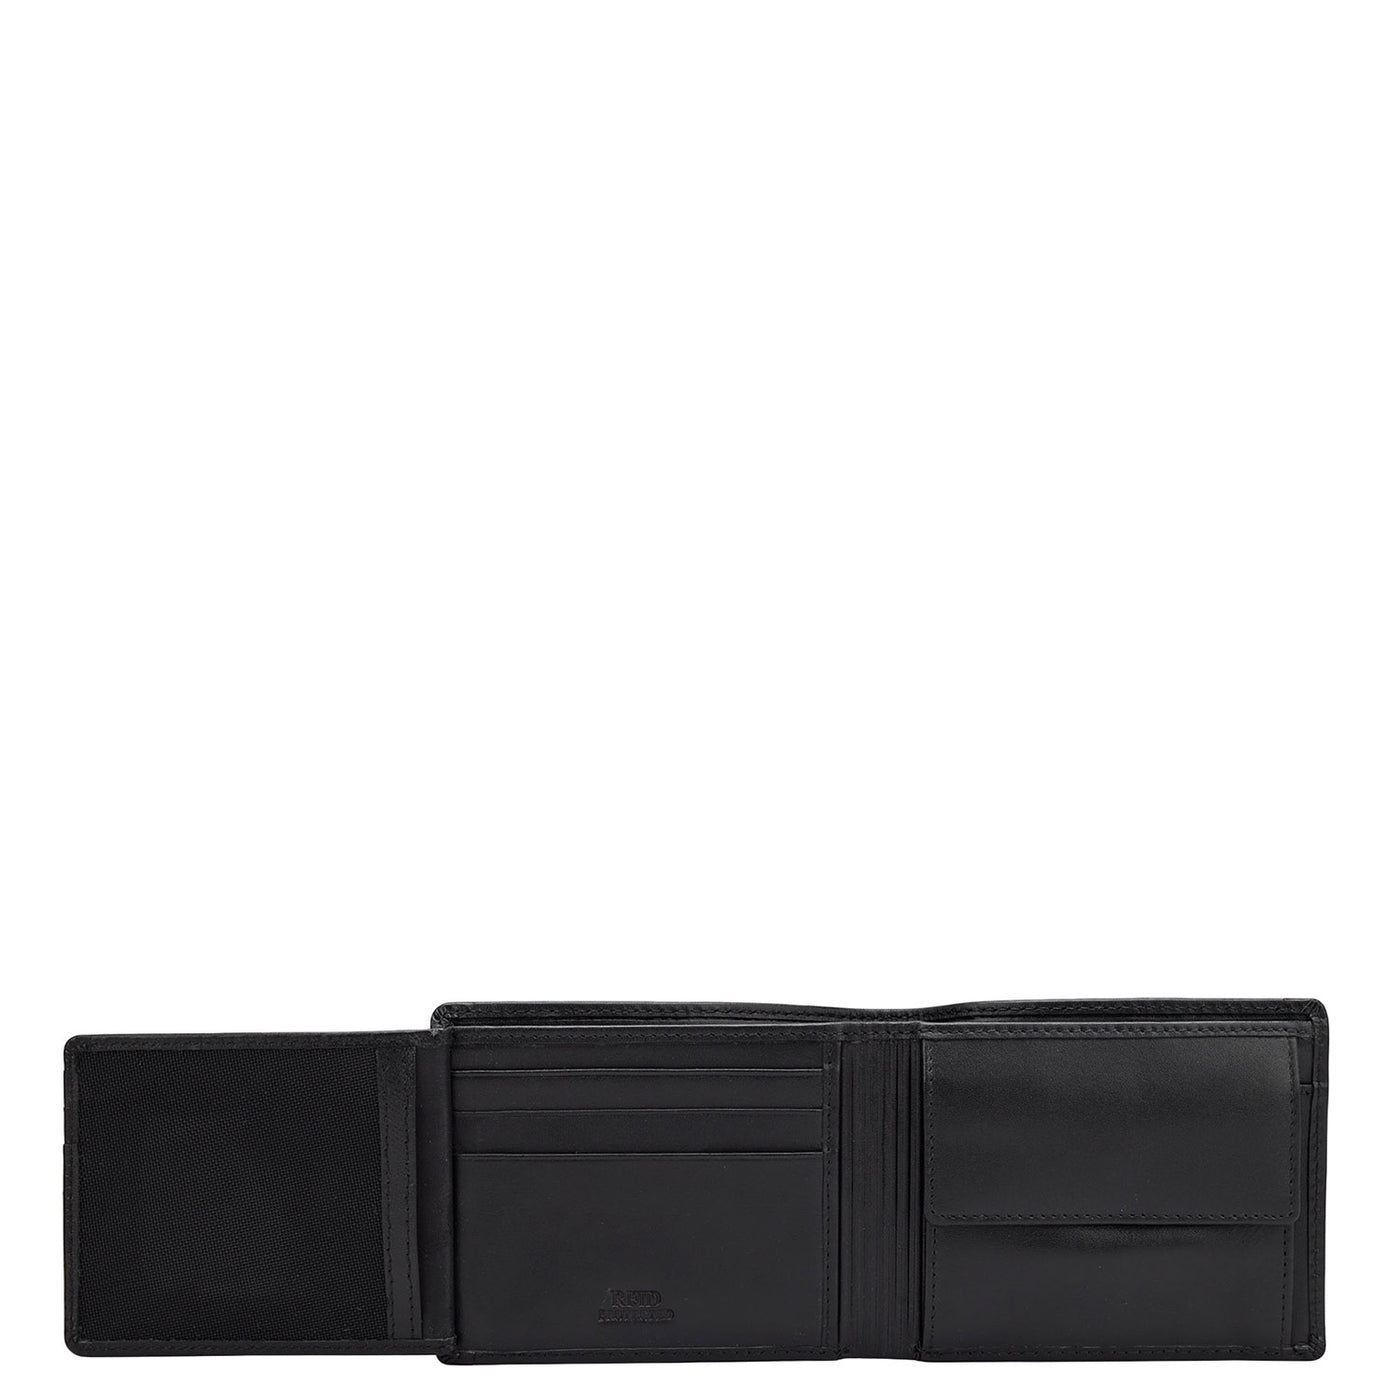 Mat Emboss Leather Mens Wallet - Black